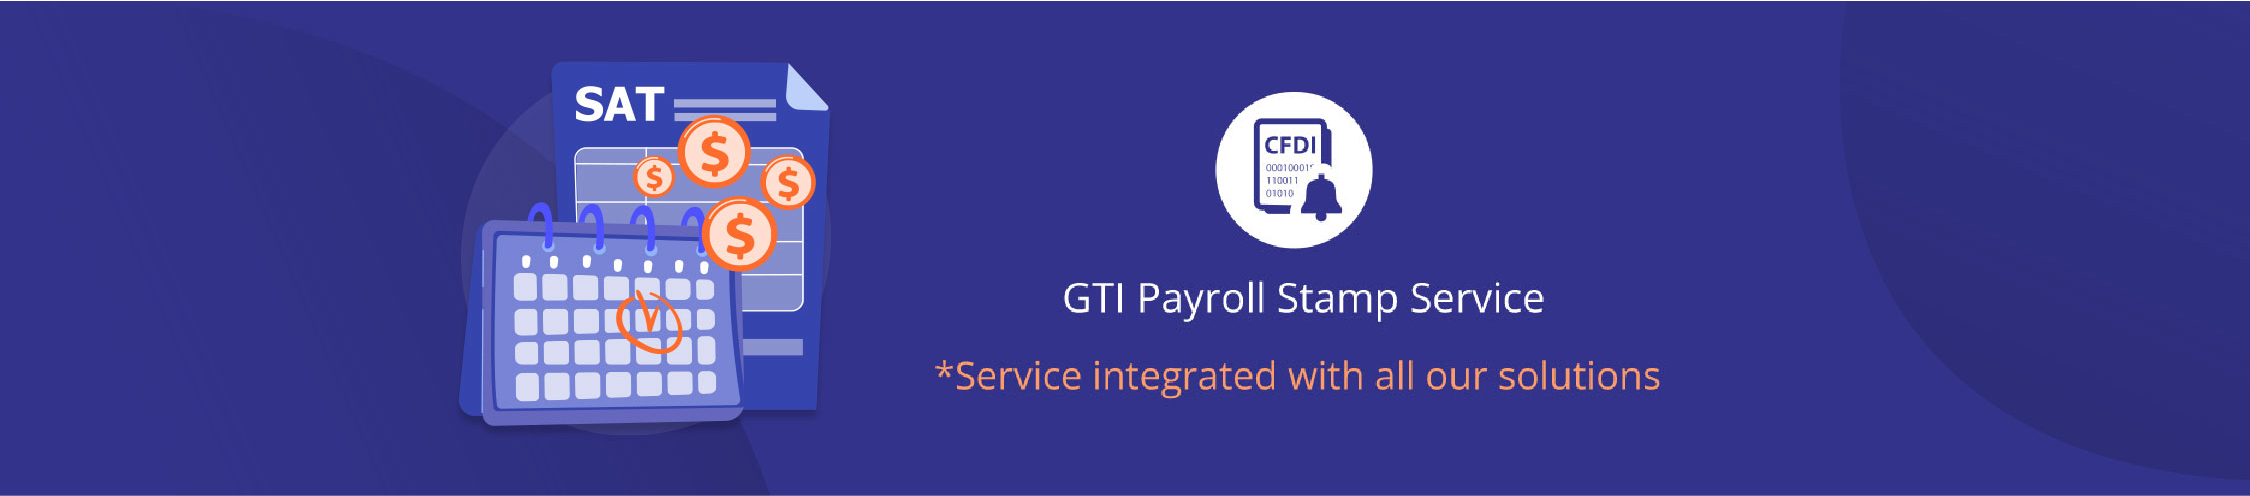 GTI Payroll Stamp Service